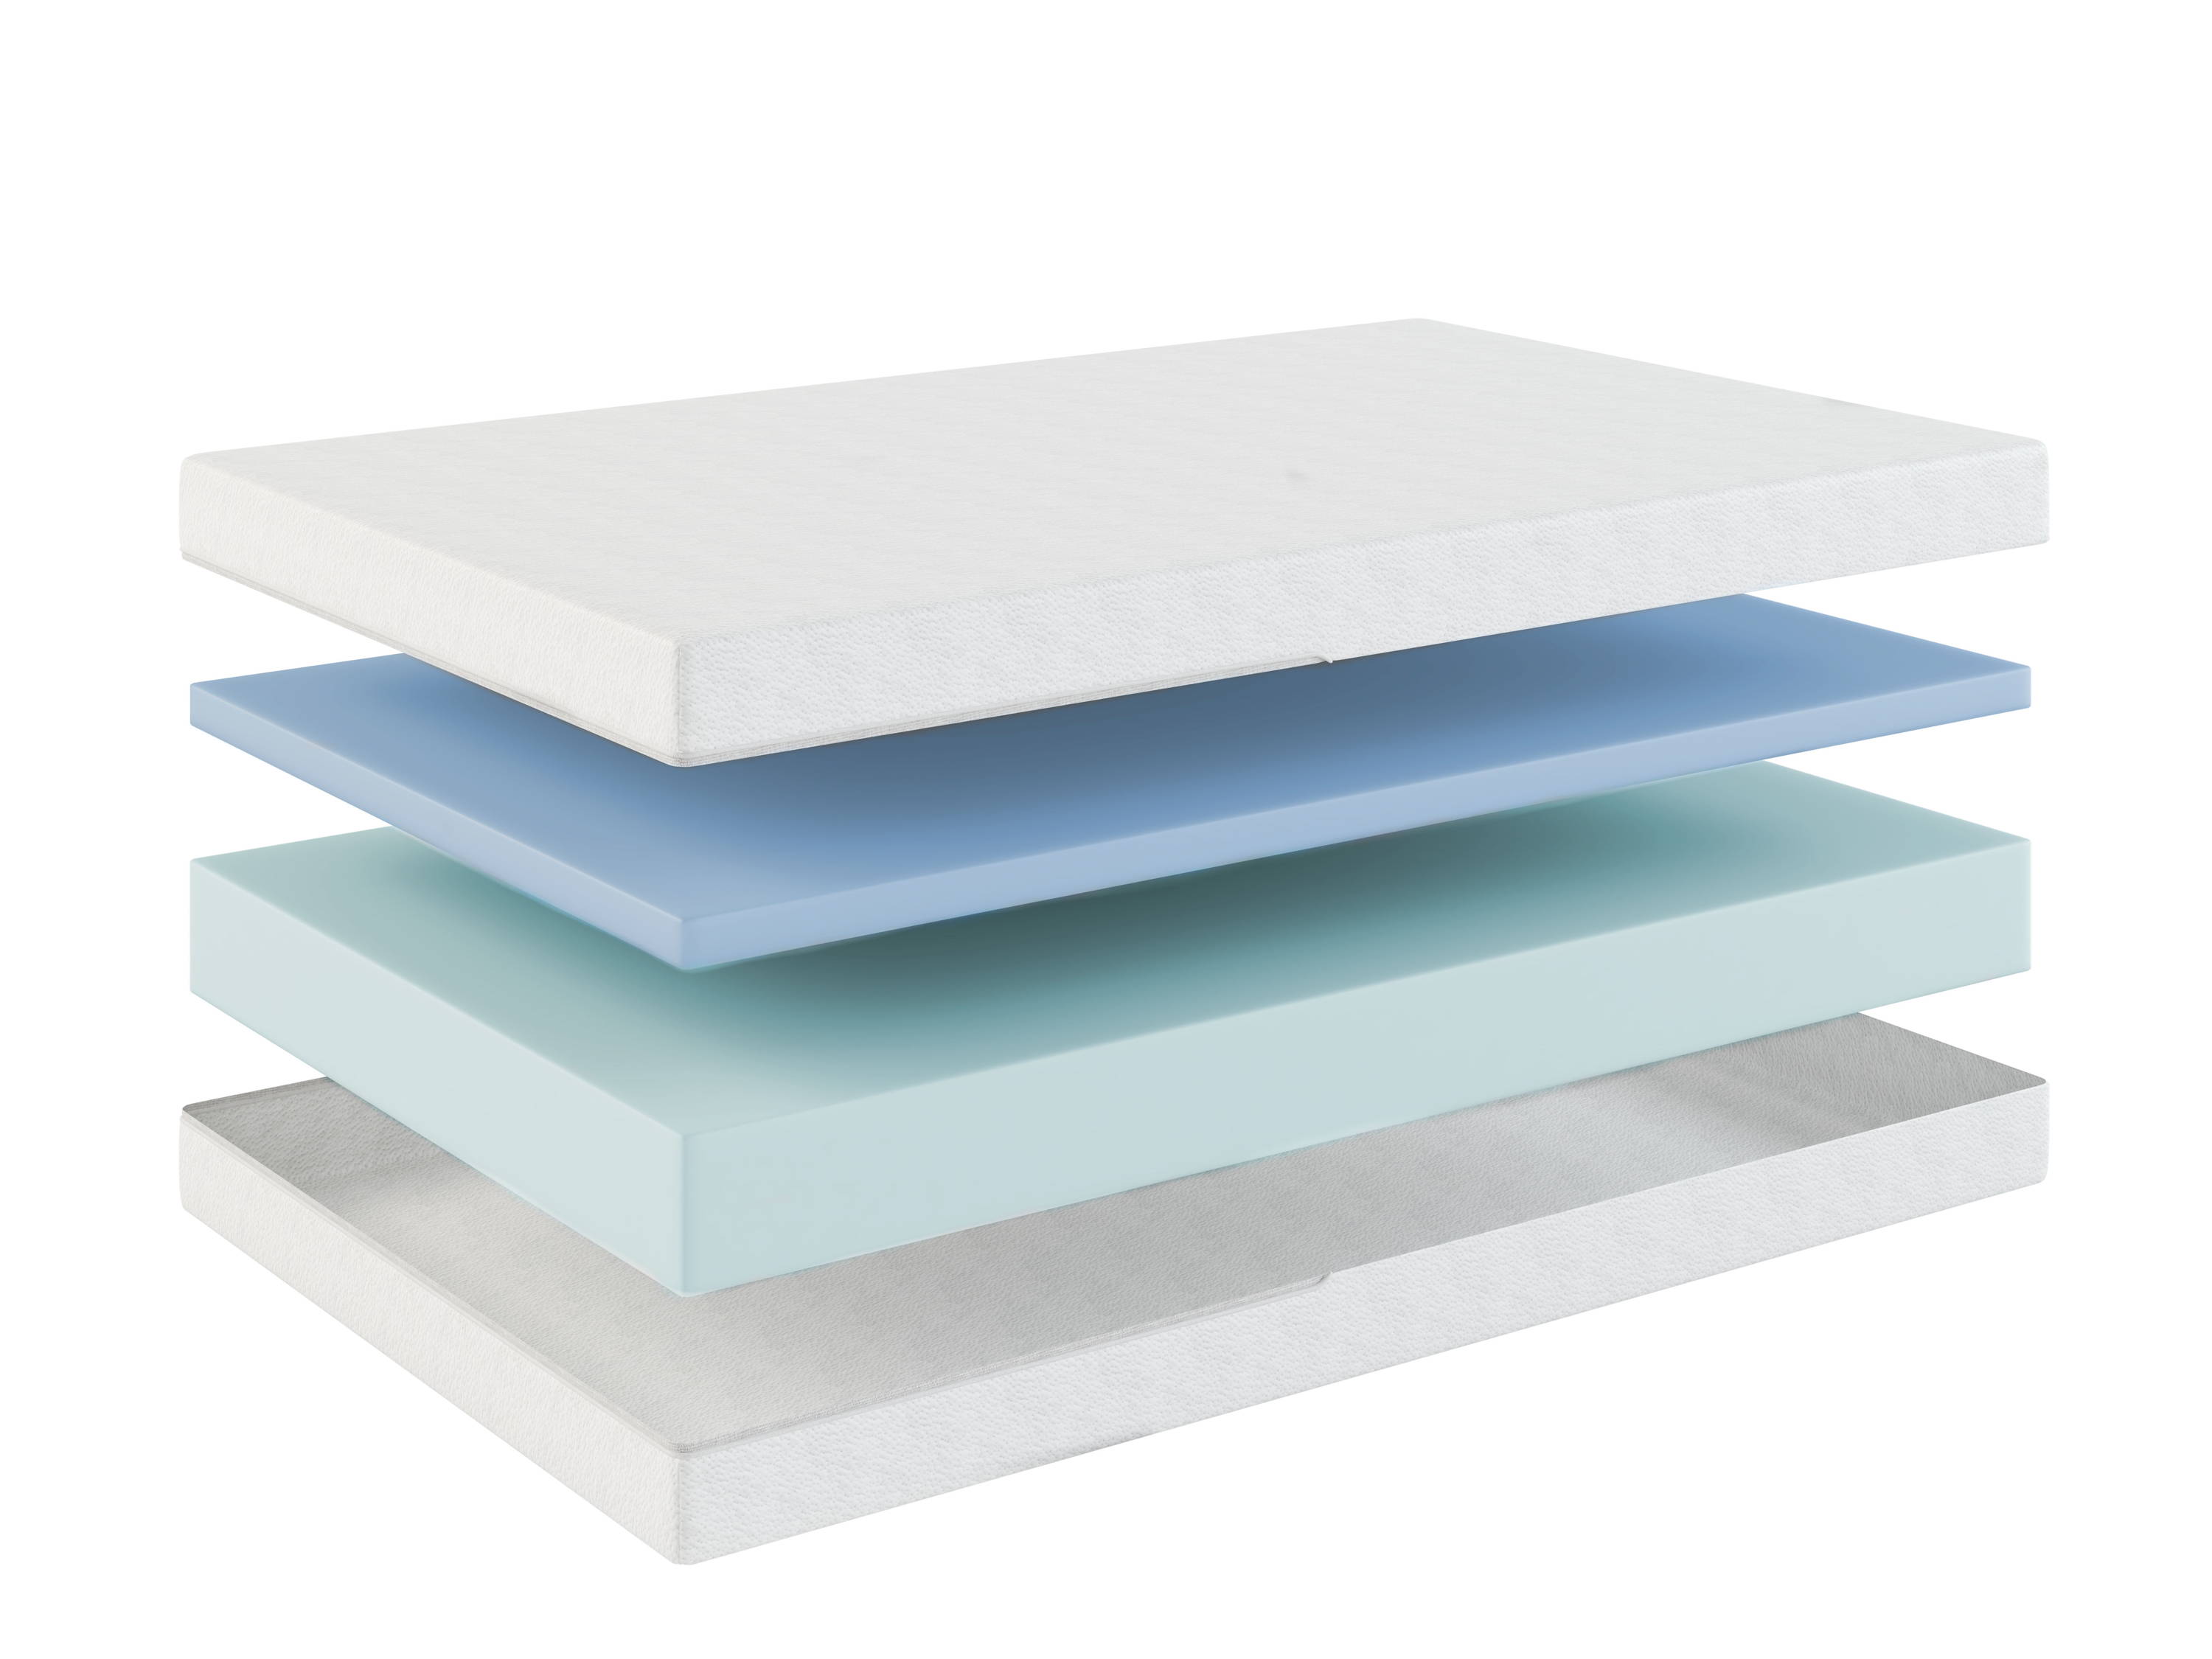 Two-Stage Basics Mini5 breathable mini crib mattress layer showing two internal layers.